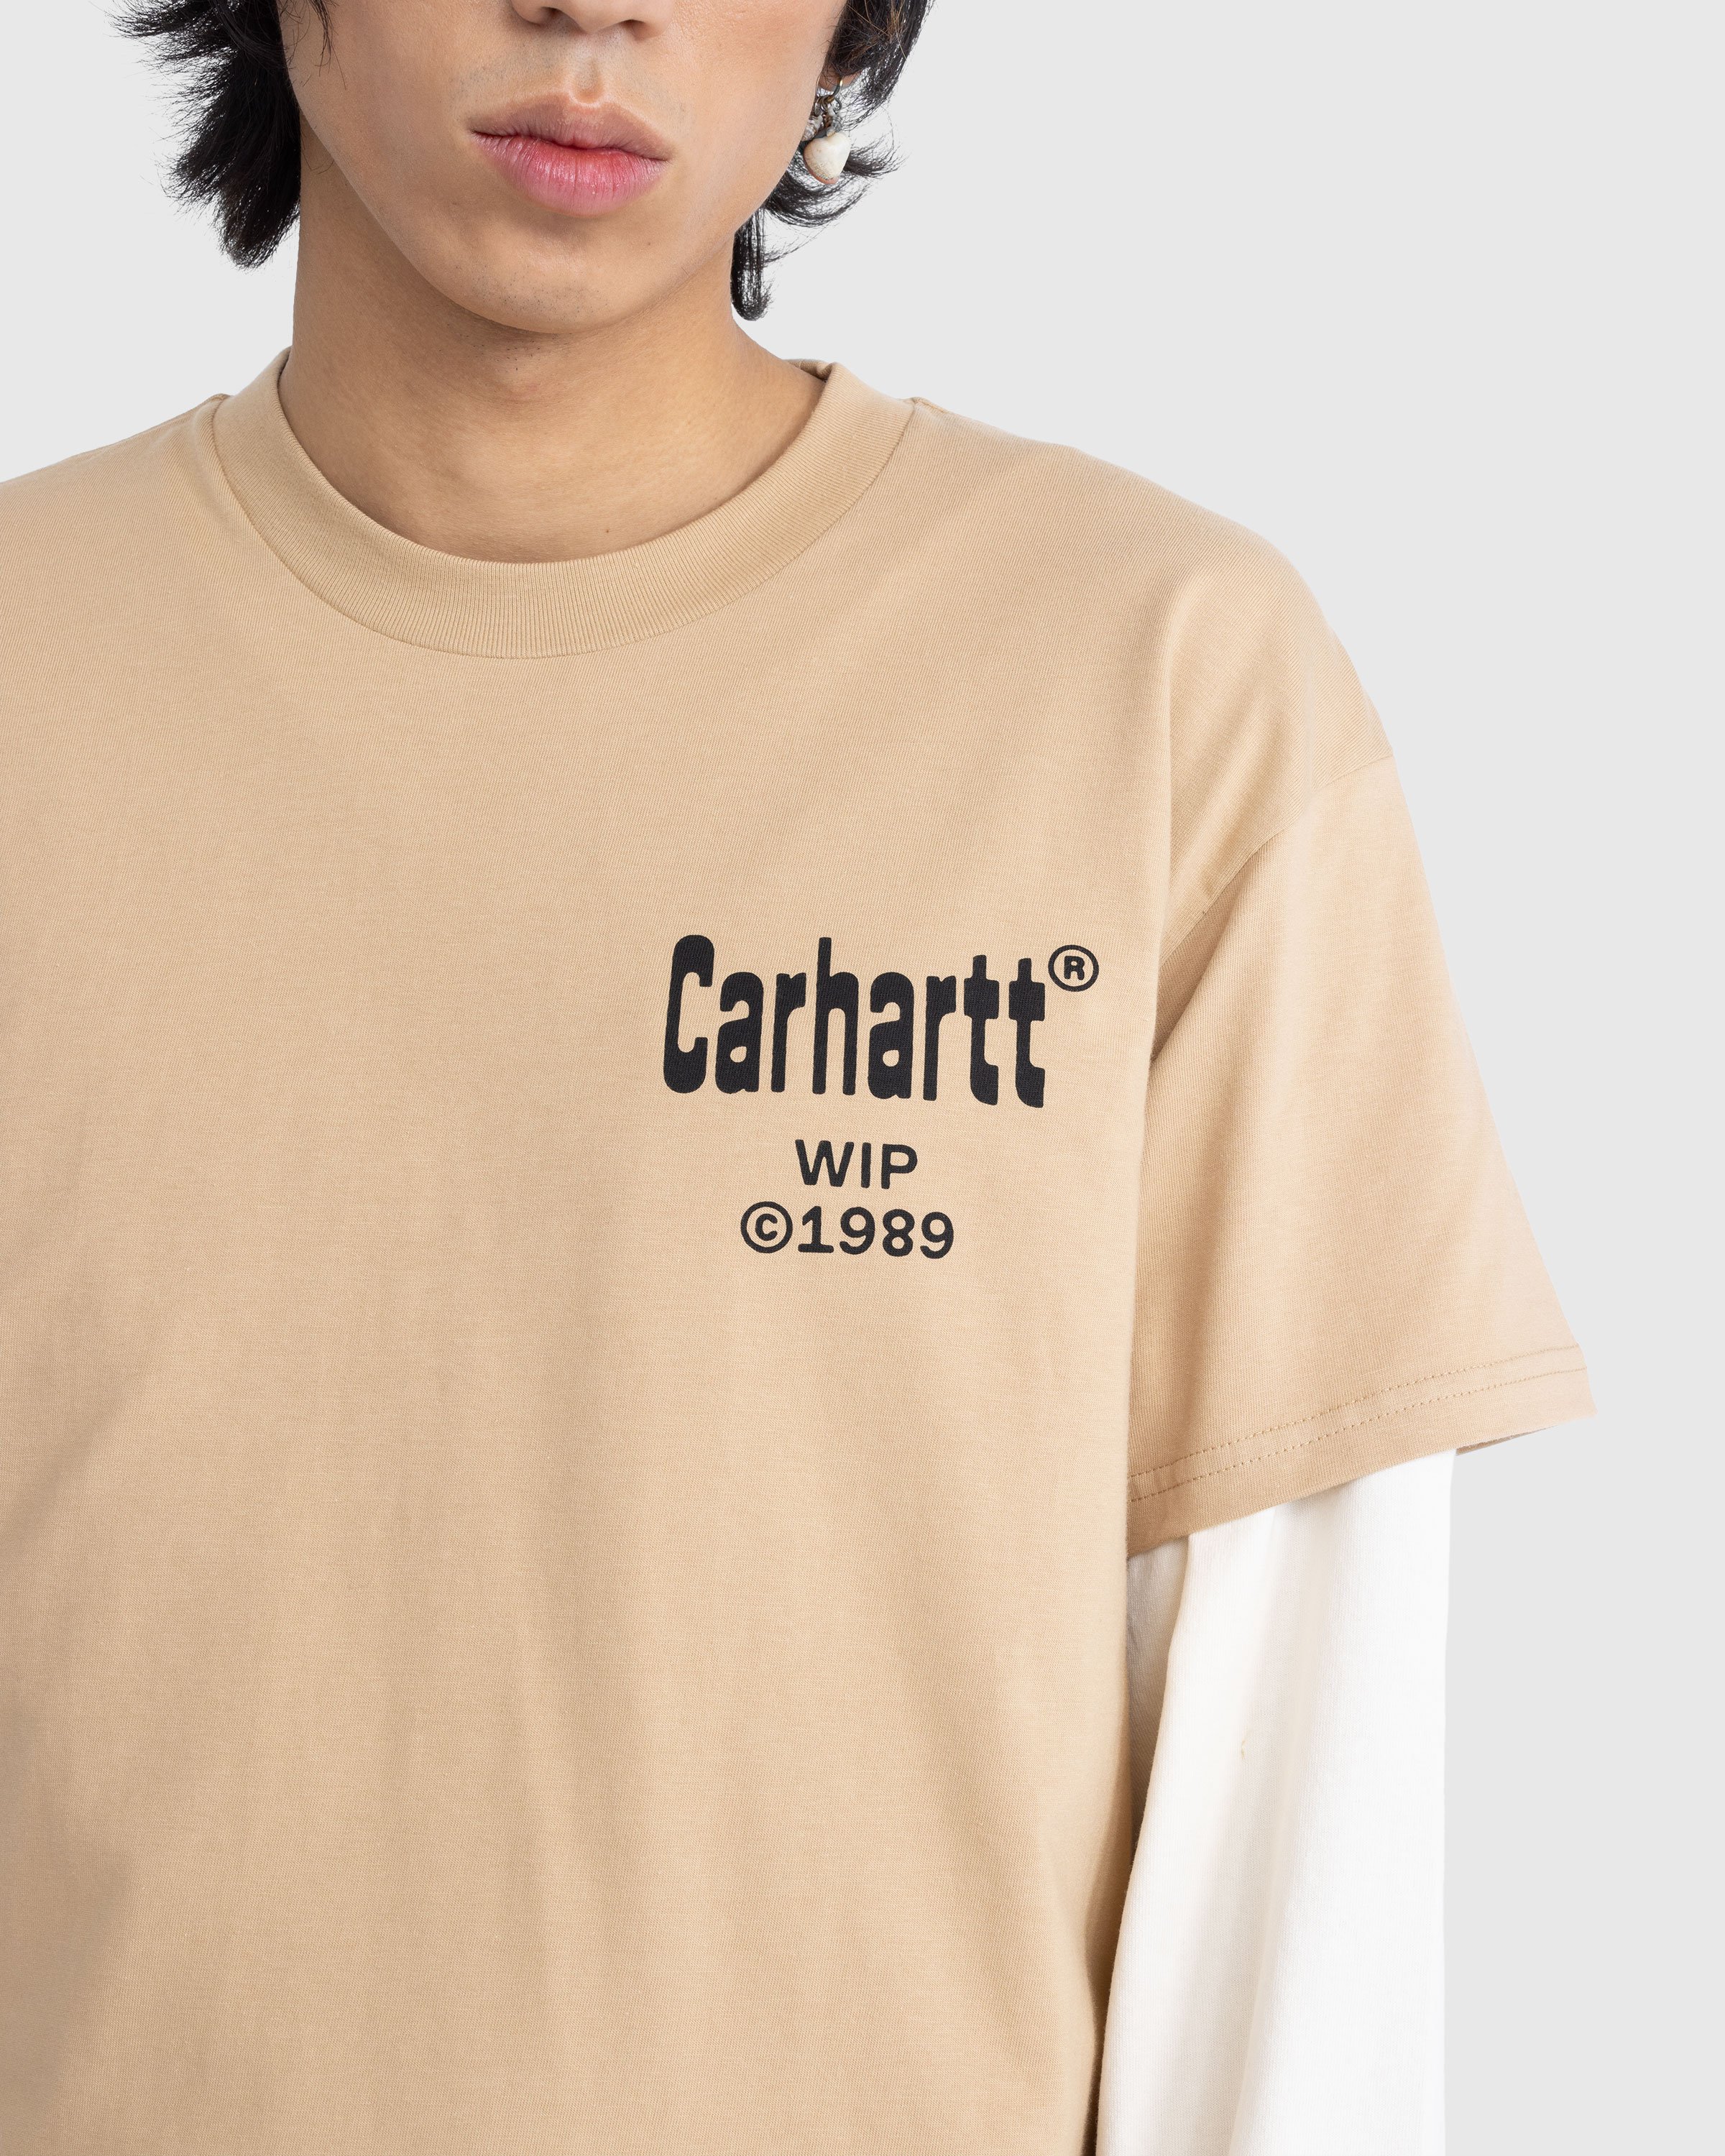 Carhartt WIP - S/S Home T-Shirt Multi - Clothing - Multi - Image 6